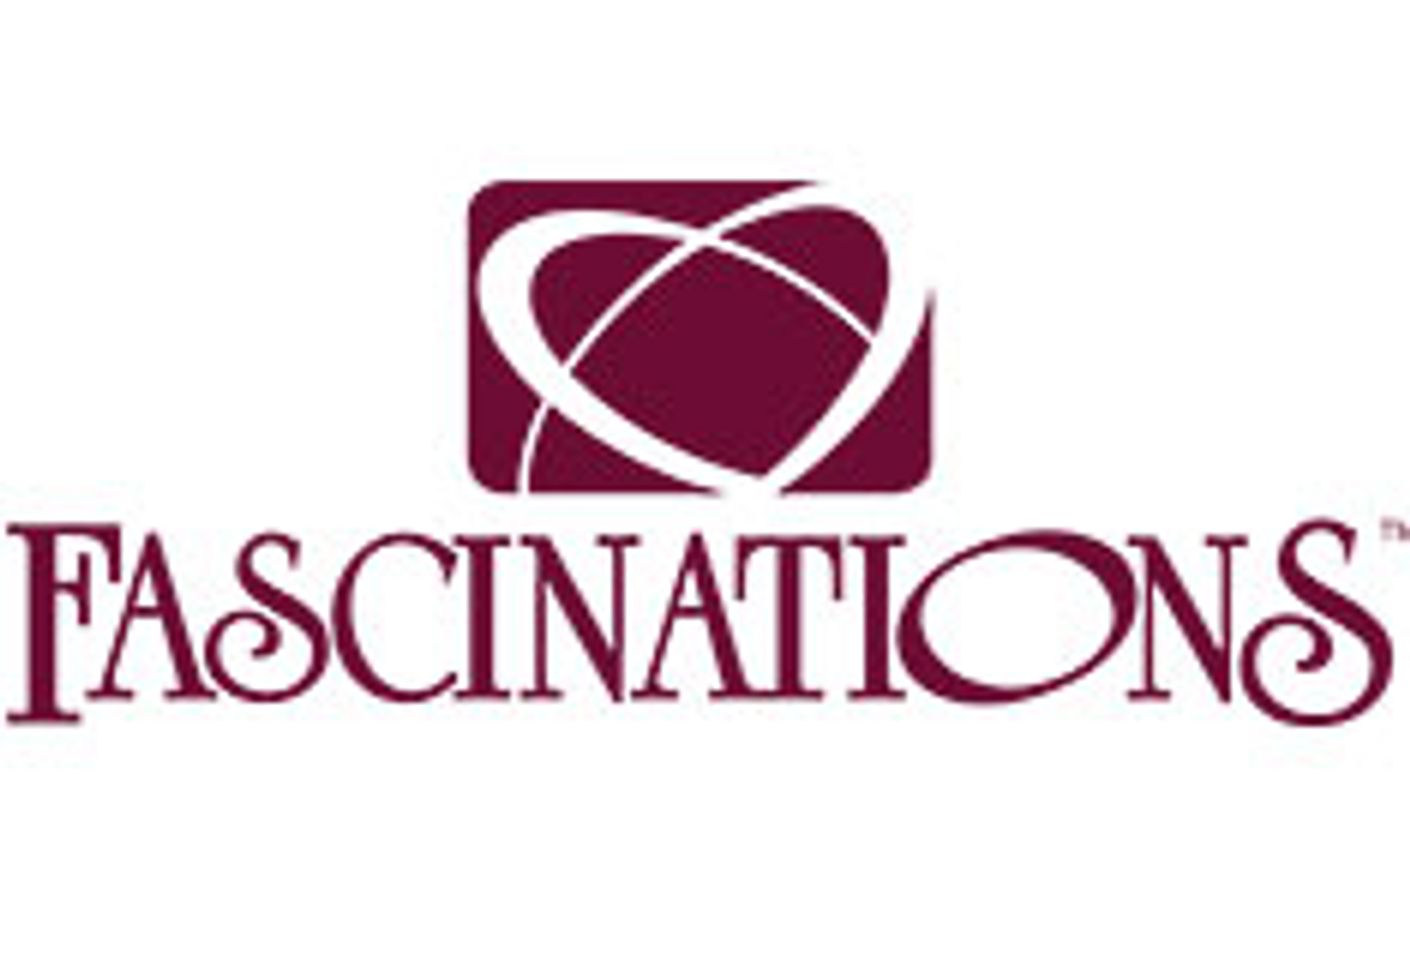 Fascinations Announces Sponsorship of 'Sextacular You!' Internet Talk Show